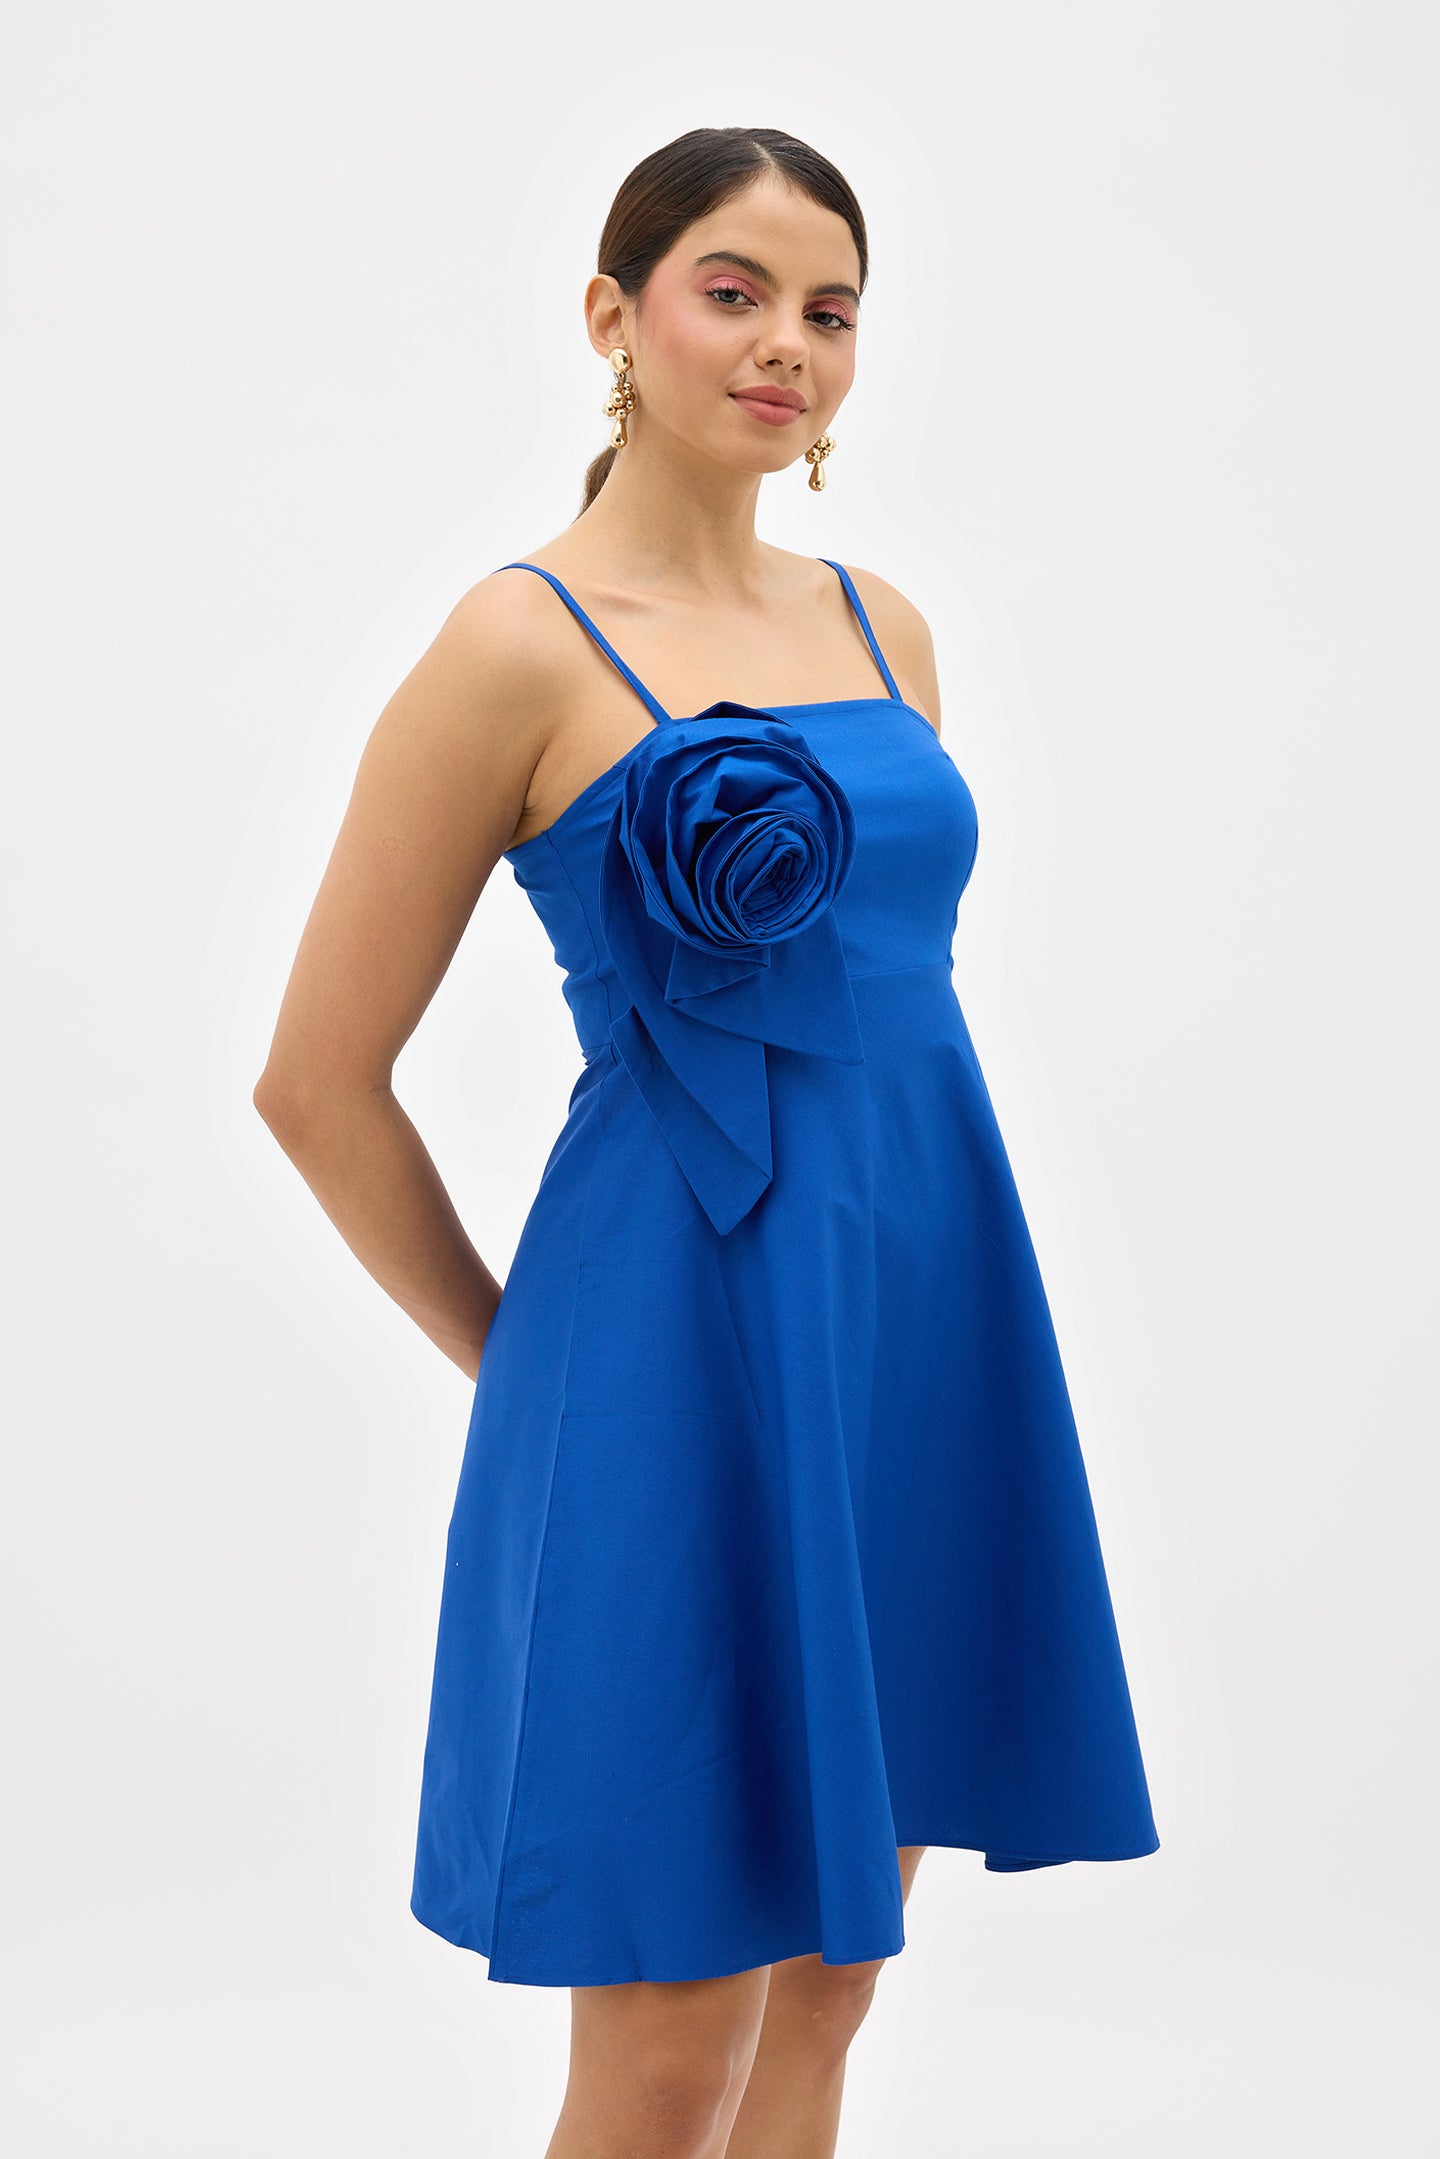 Lisa|Glam cotton dress with rosette applique detailing